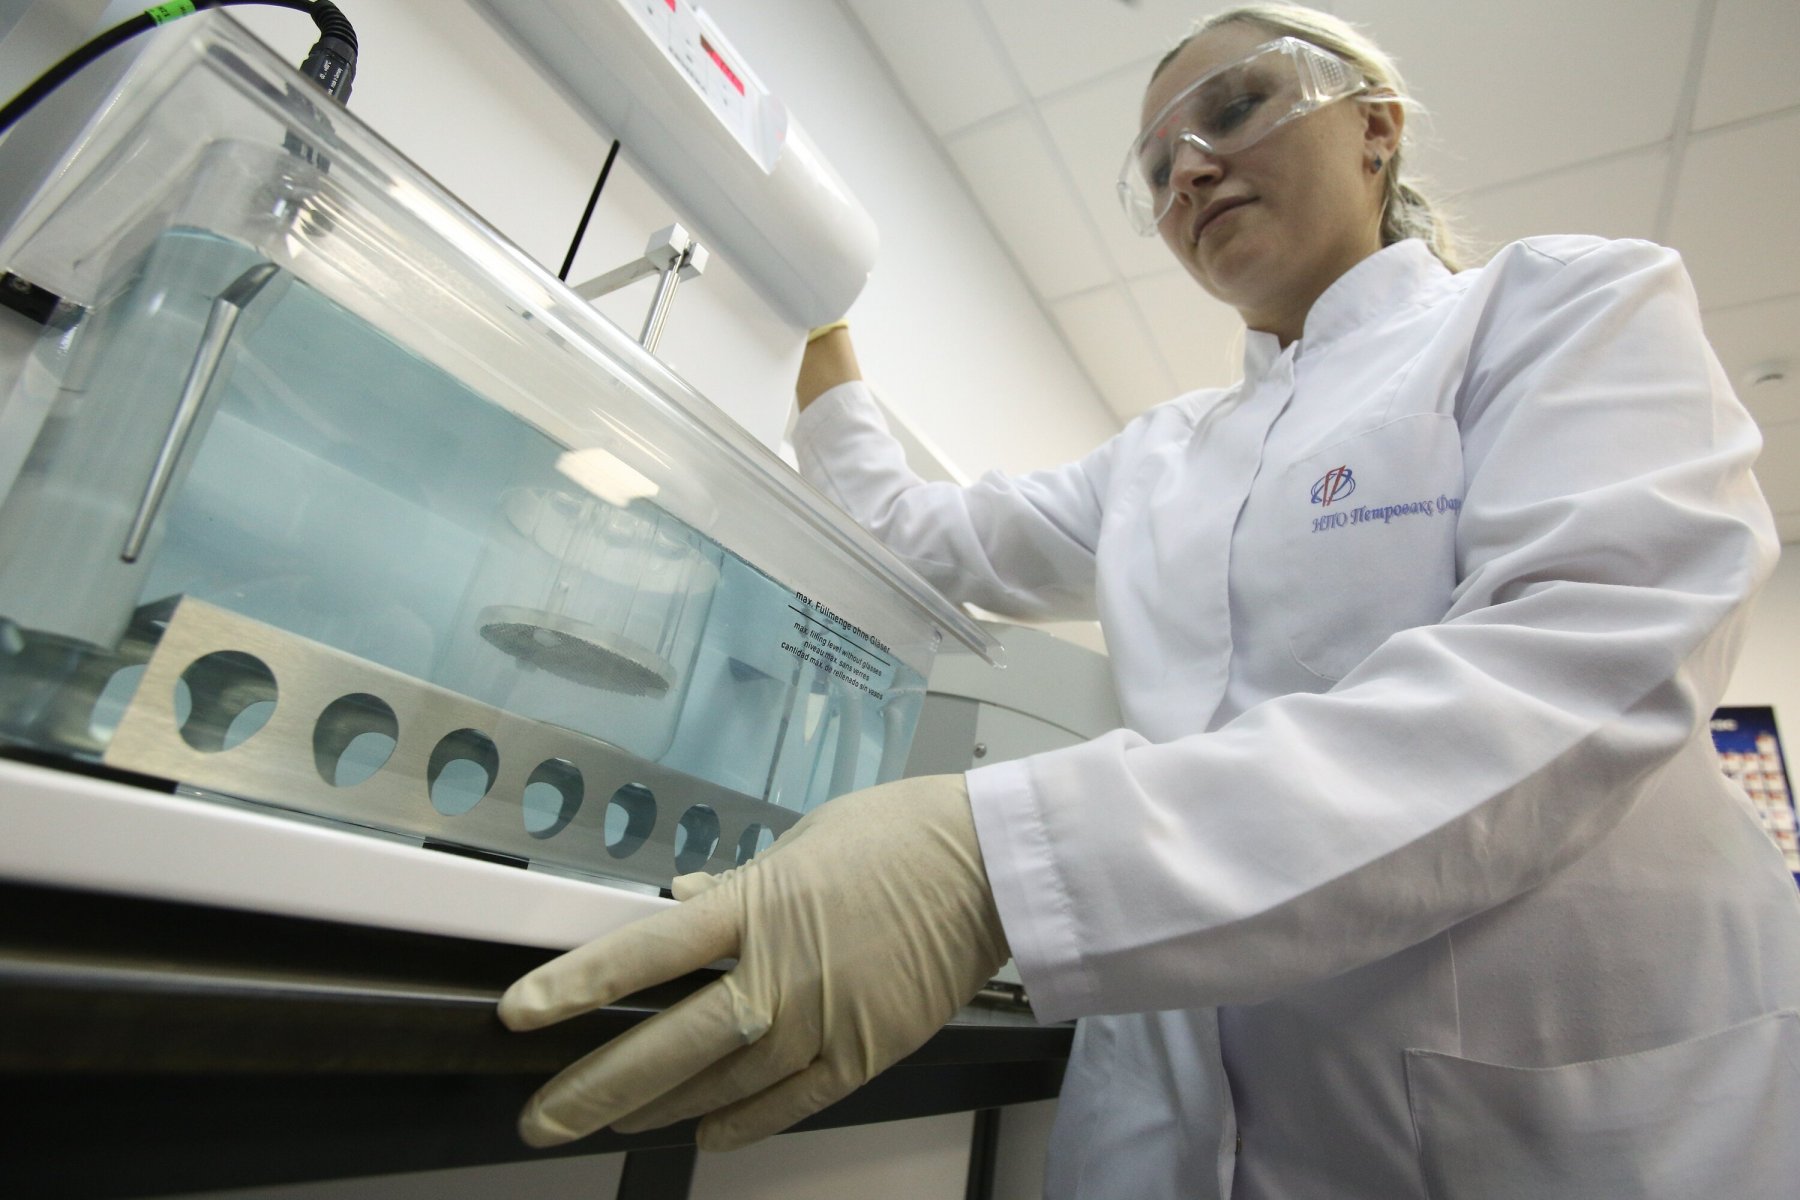 В Московской области запущено производство дженерика антибиотика «Альфаксим»